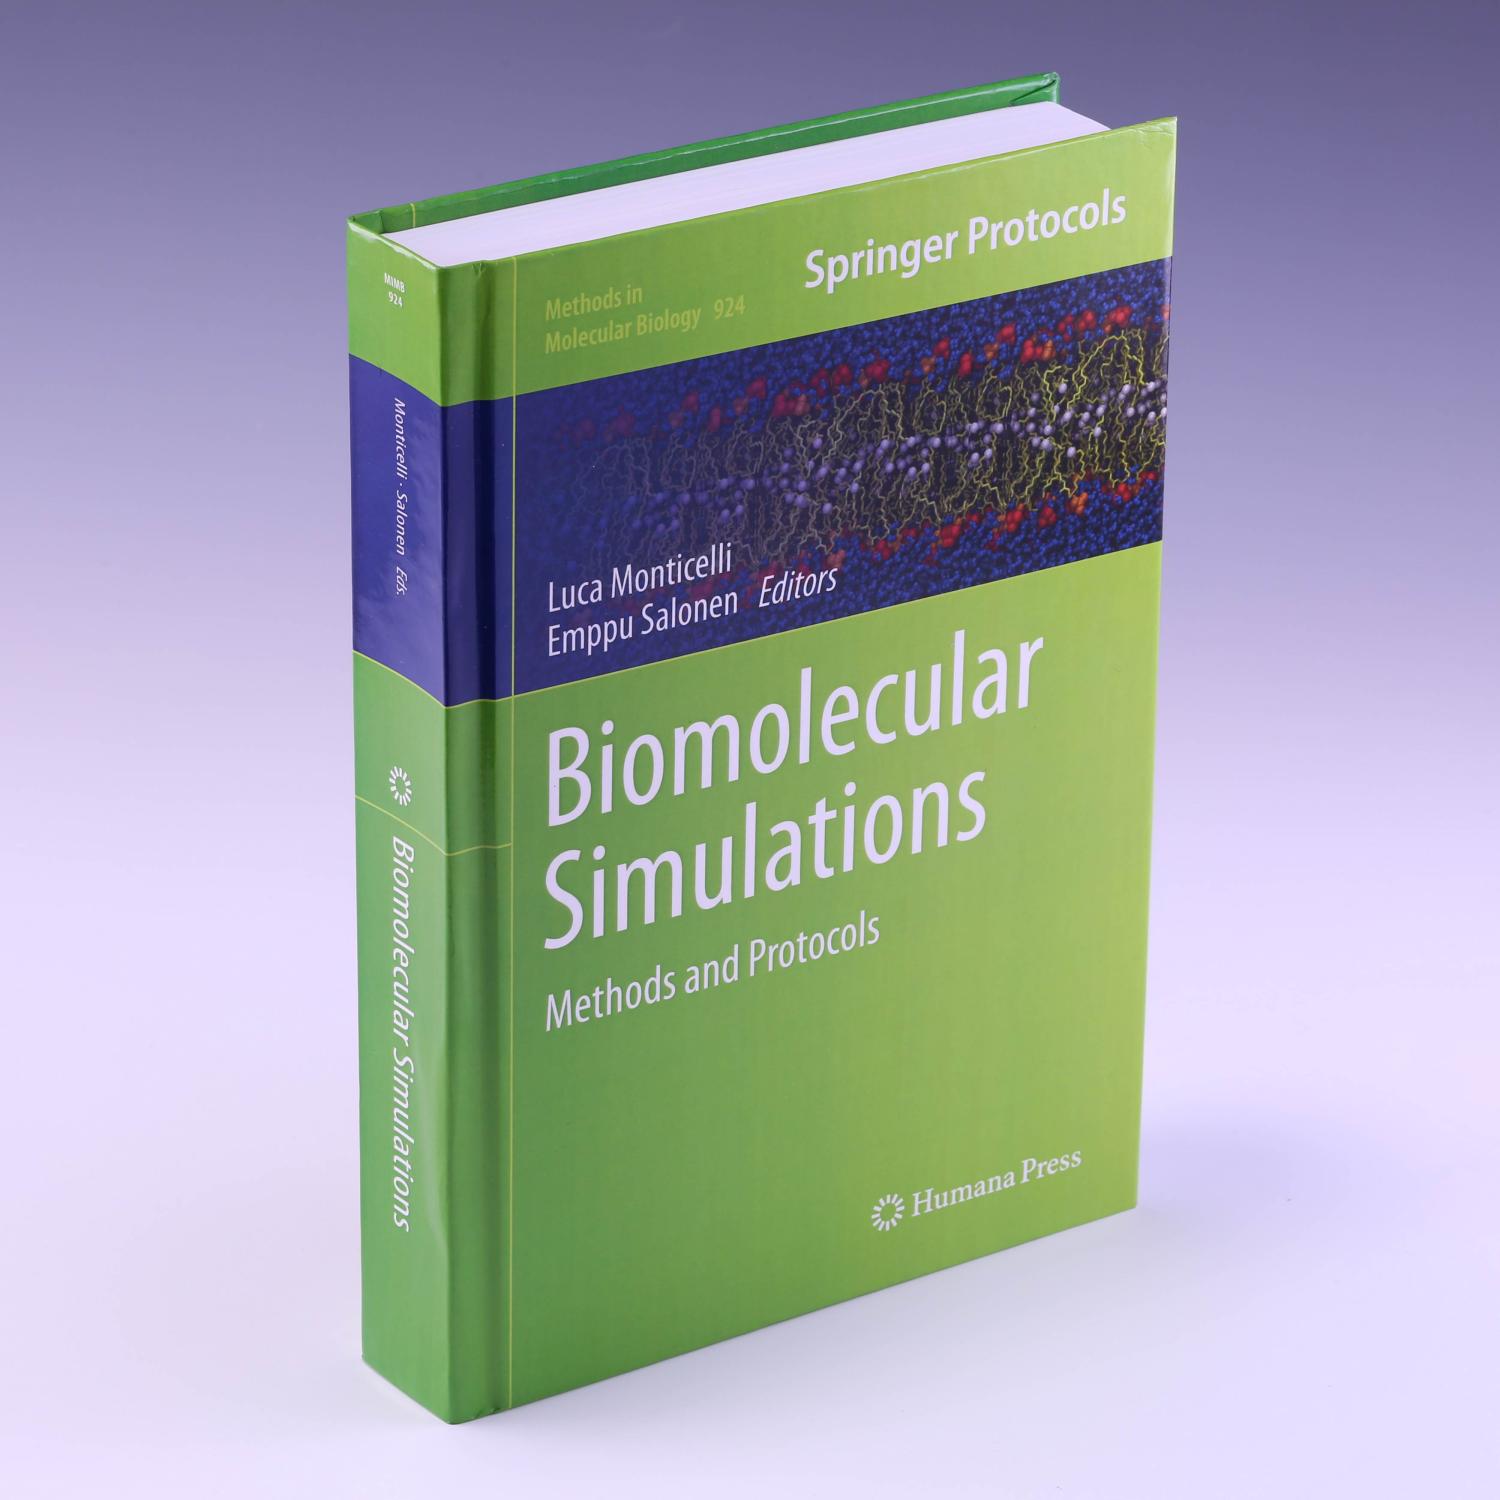 Biomolecular Simulations: Methods and Protocols (Methods in Molecular Biology)